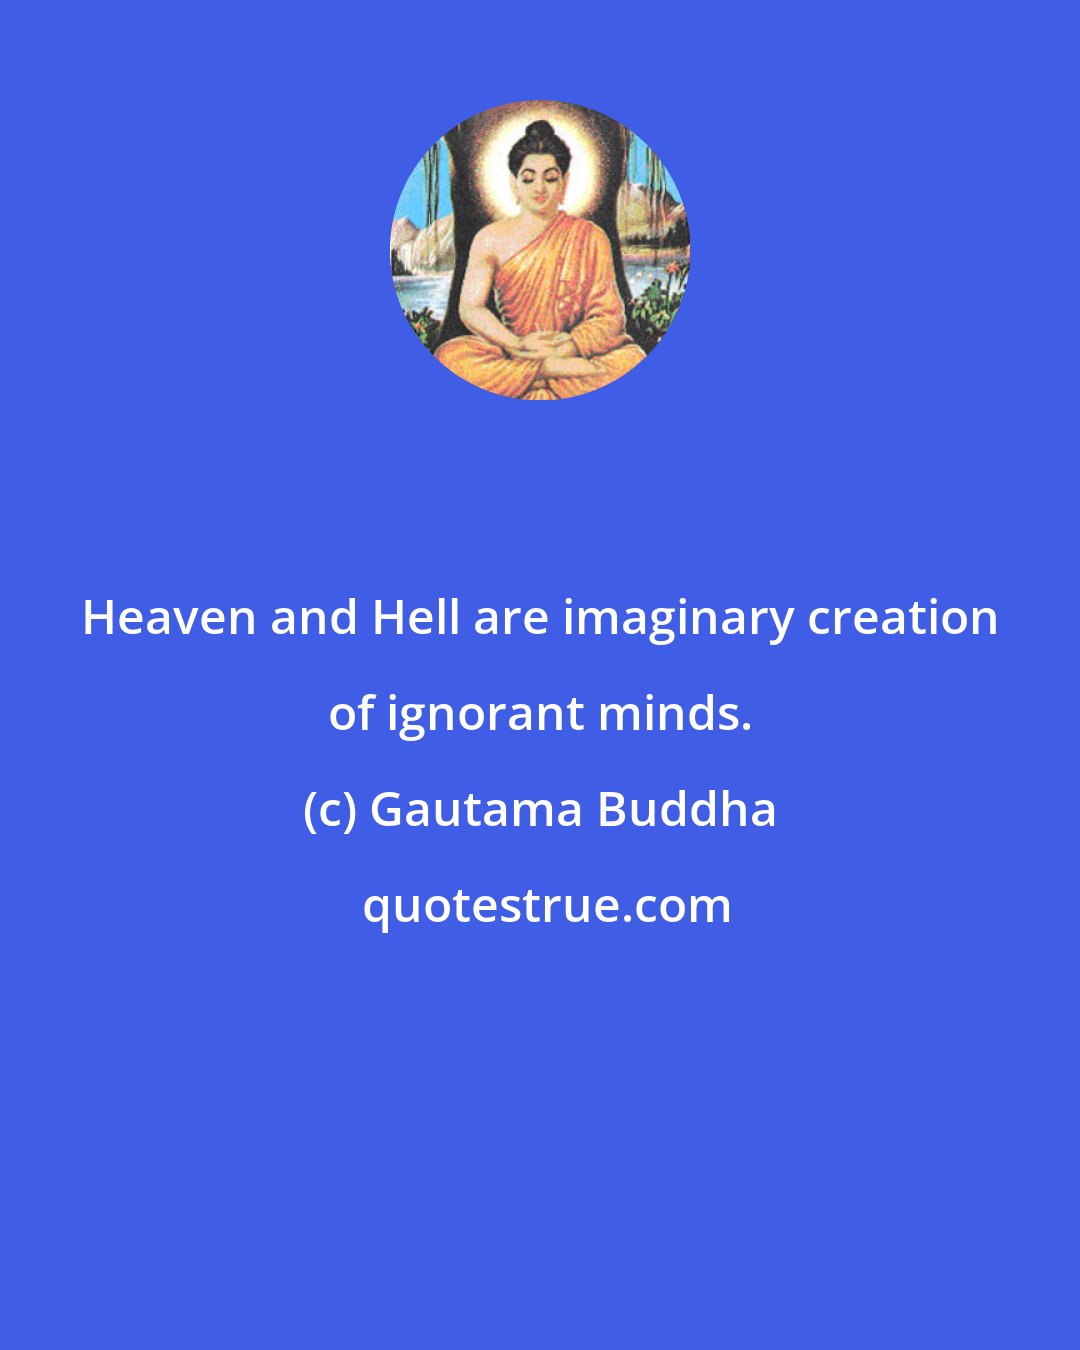 Gautama Buddha: Heaven and Hell are imaginary creation of ignorant minds.